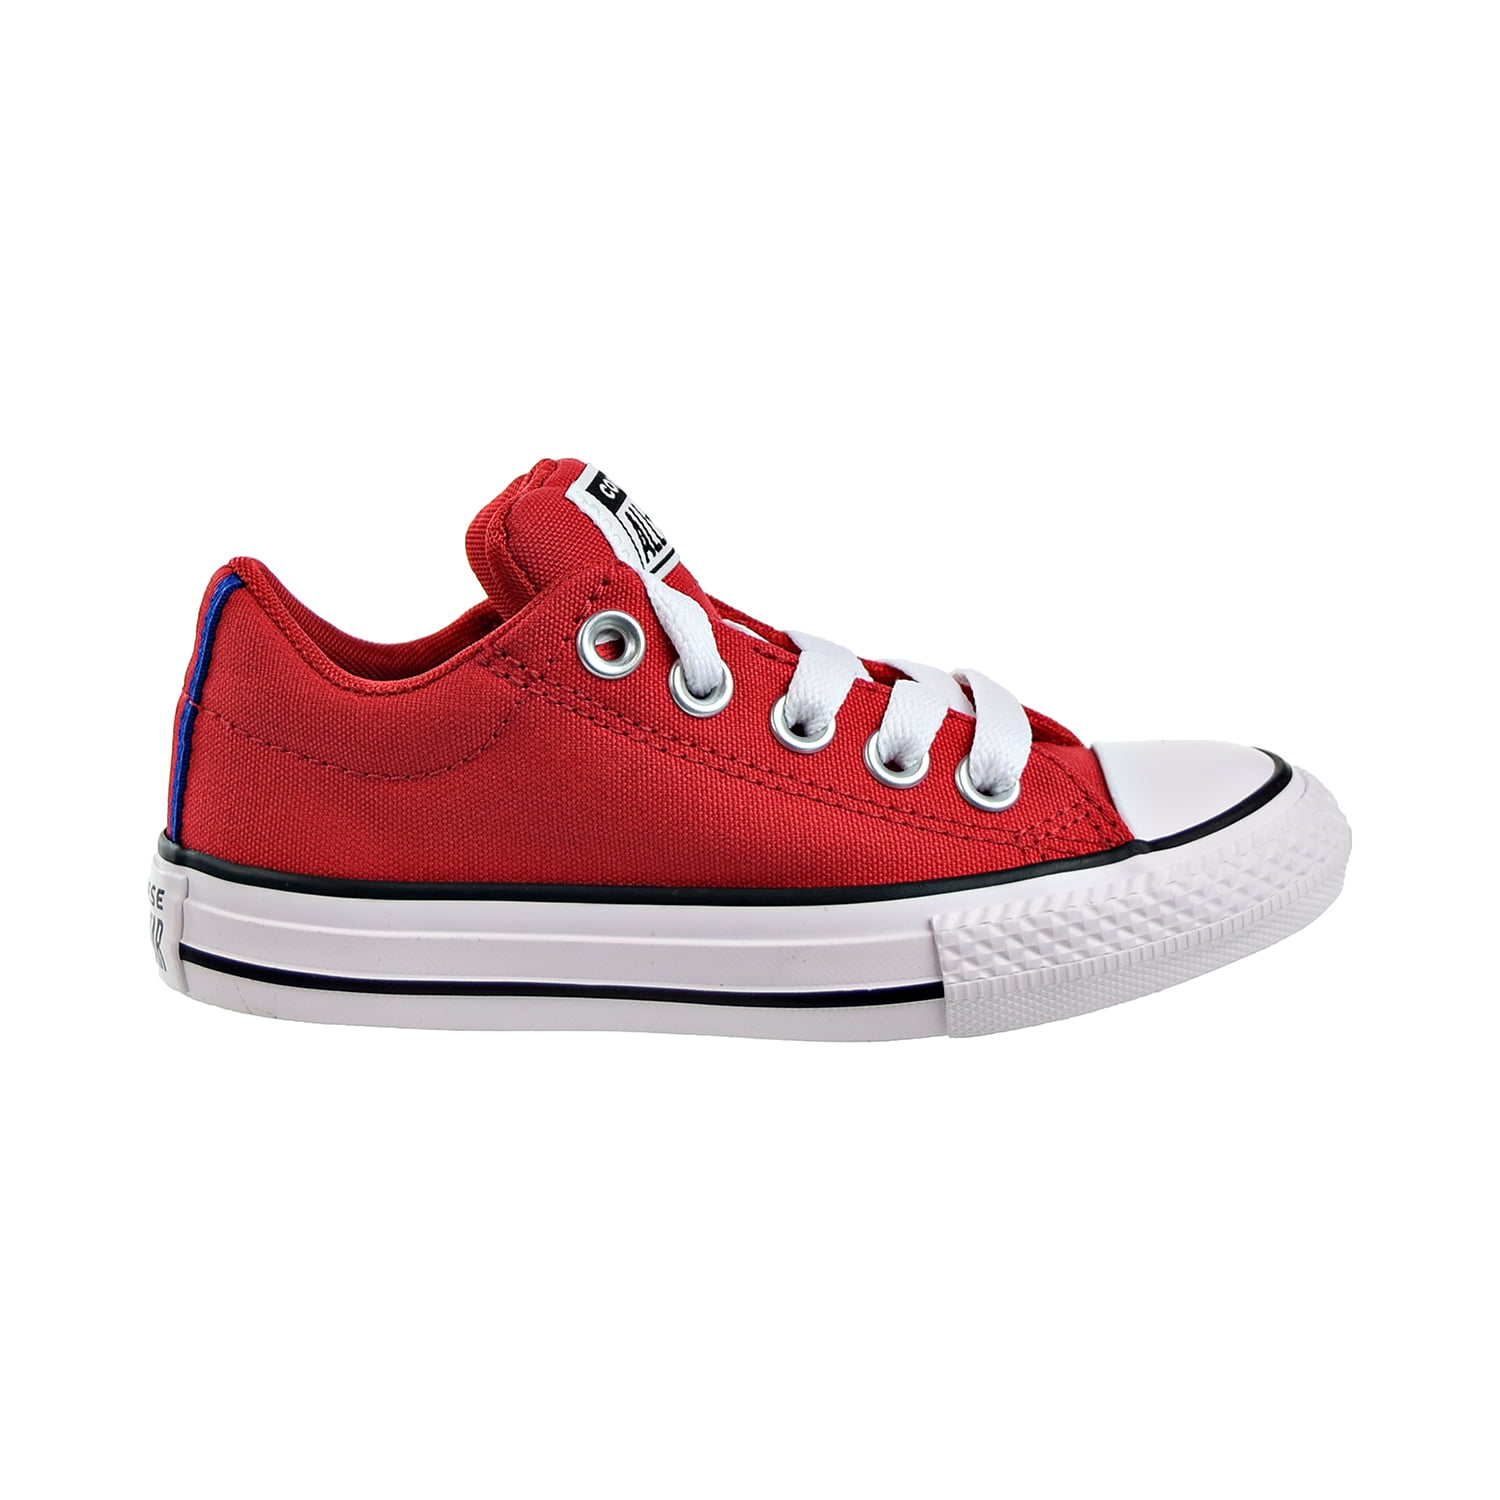 Converse Chuck Taylor All Star Street Slip Big Kids Shoes Enamel Red-Black-White  663598f 